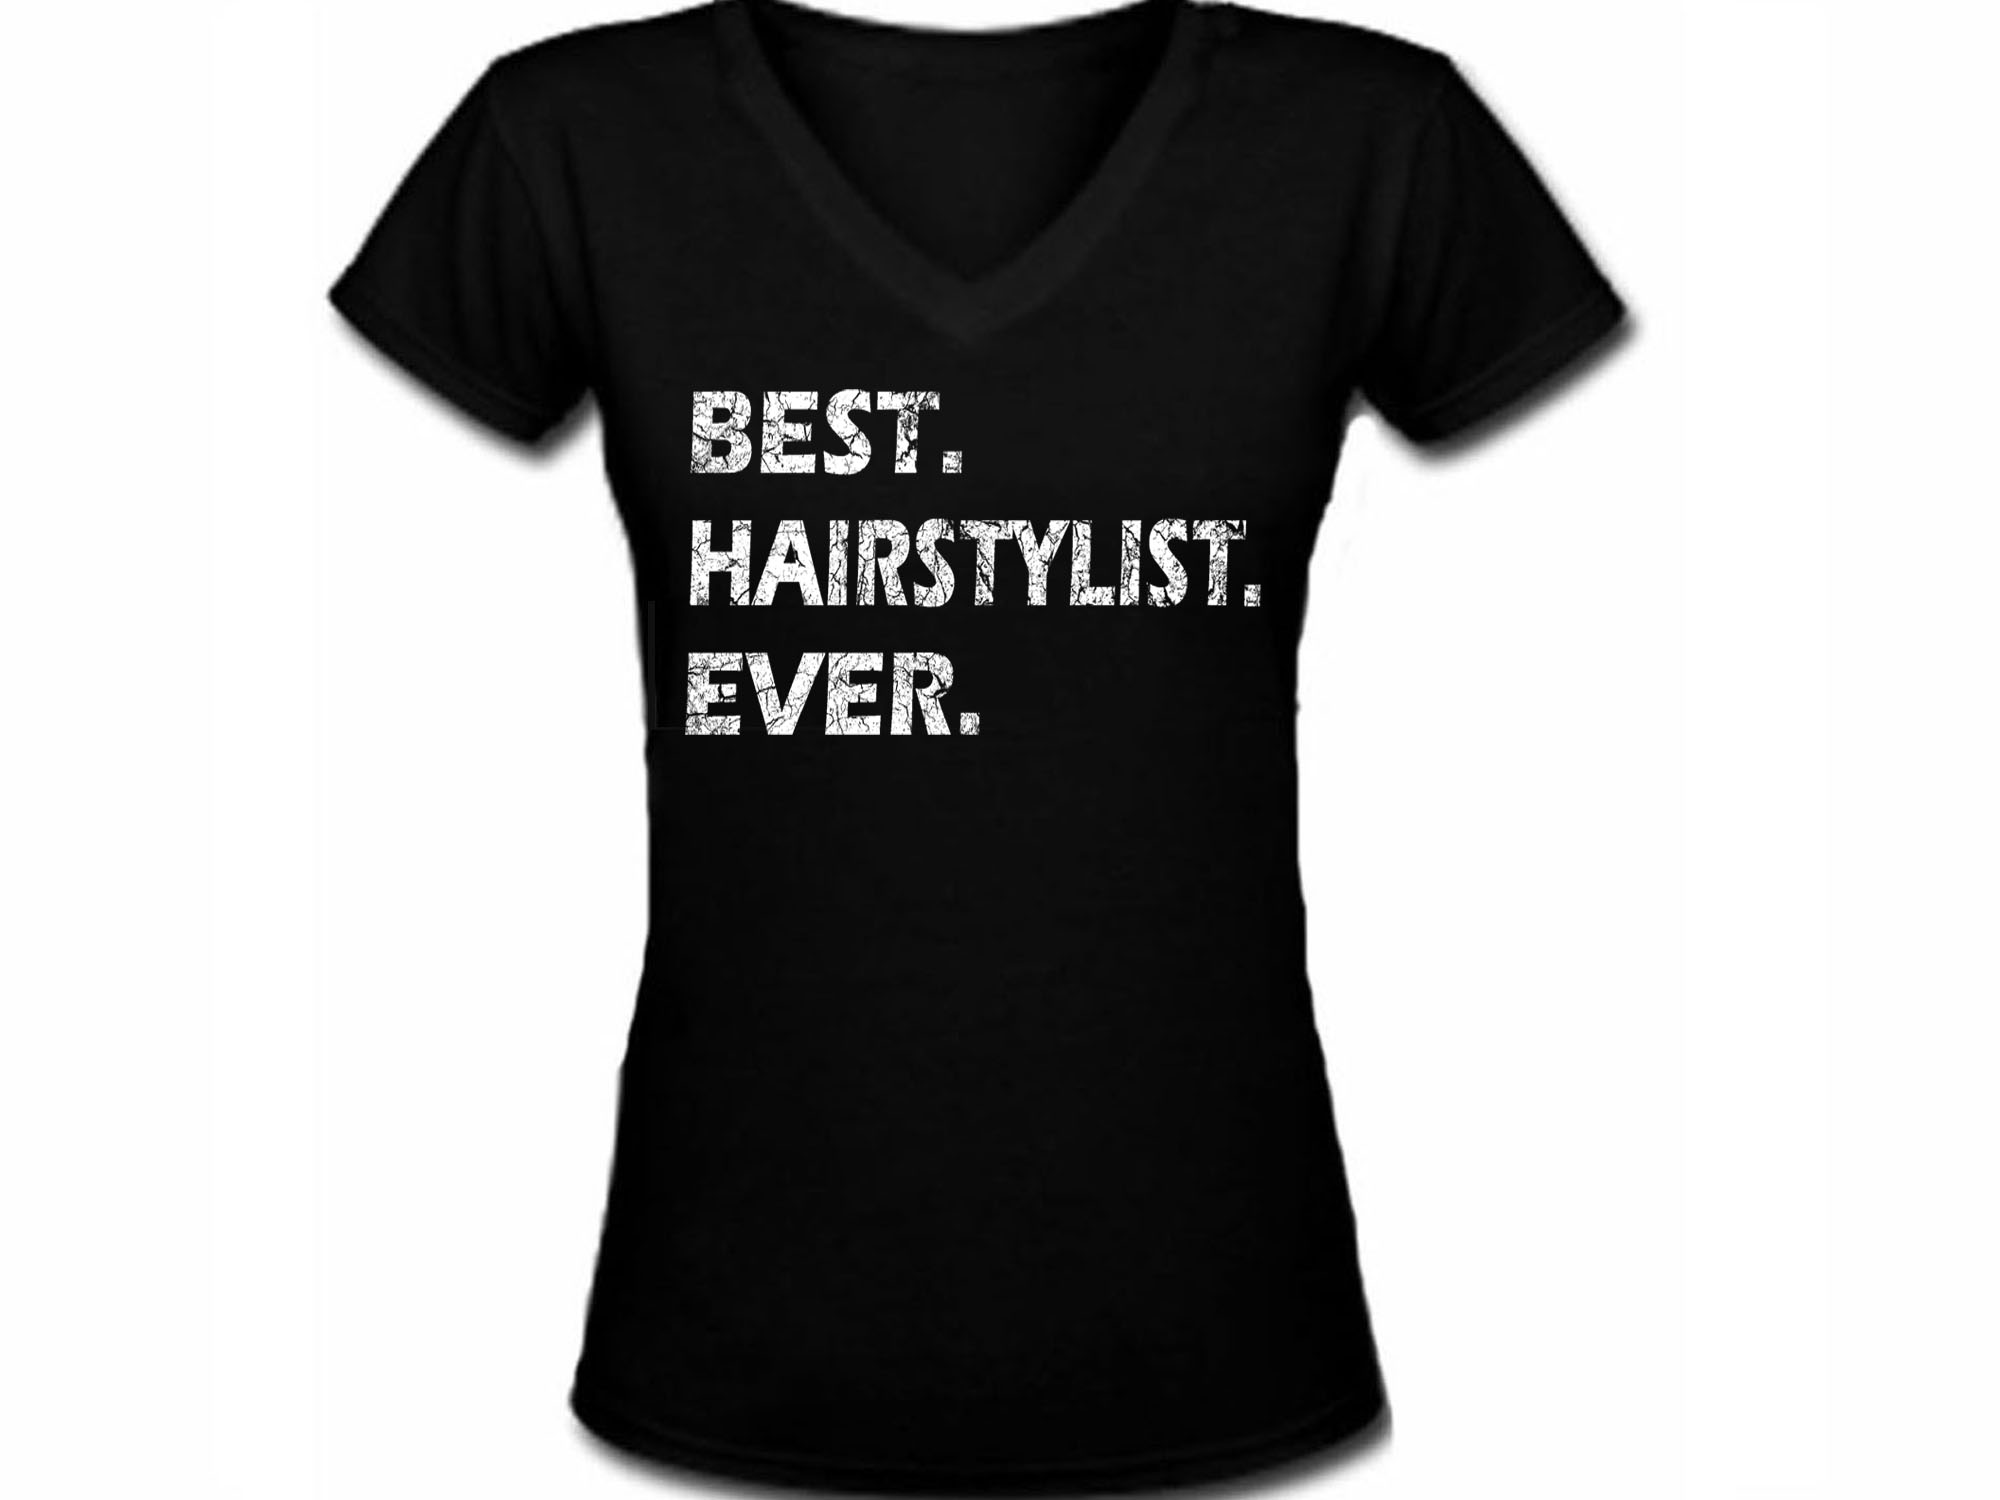 Best hairstylist ever women v neck black top shirt